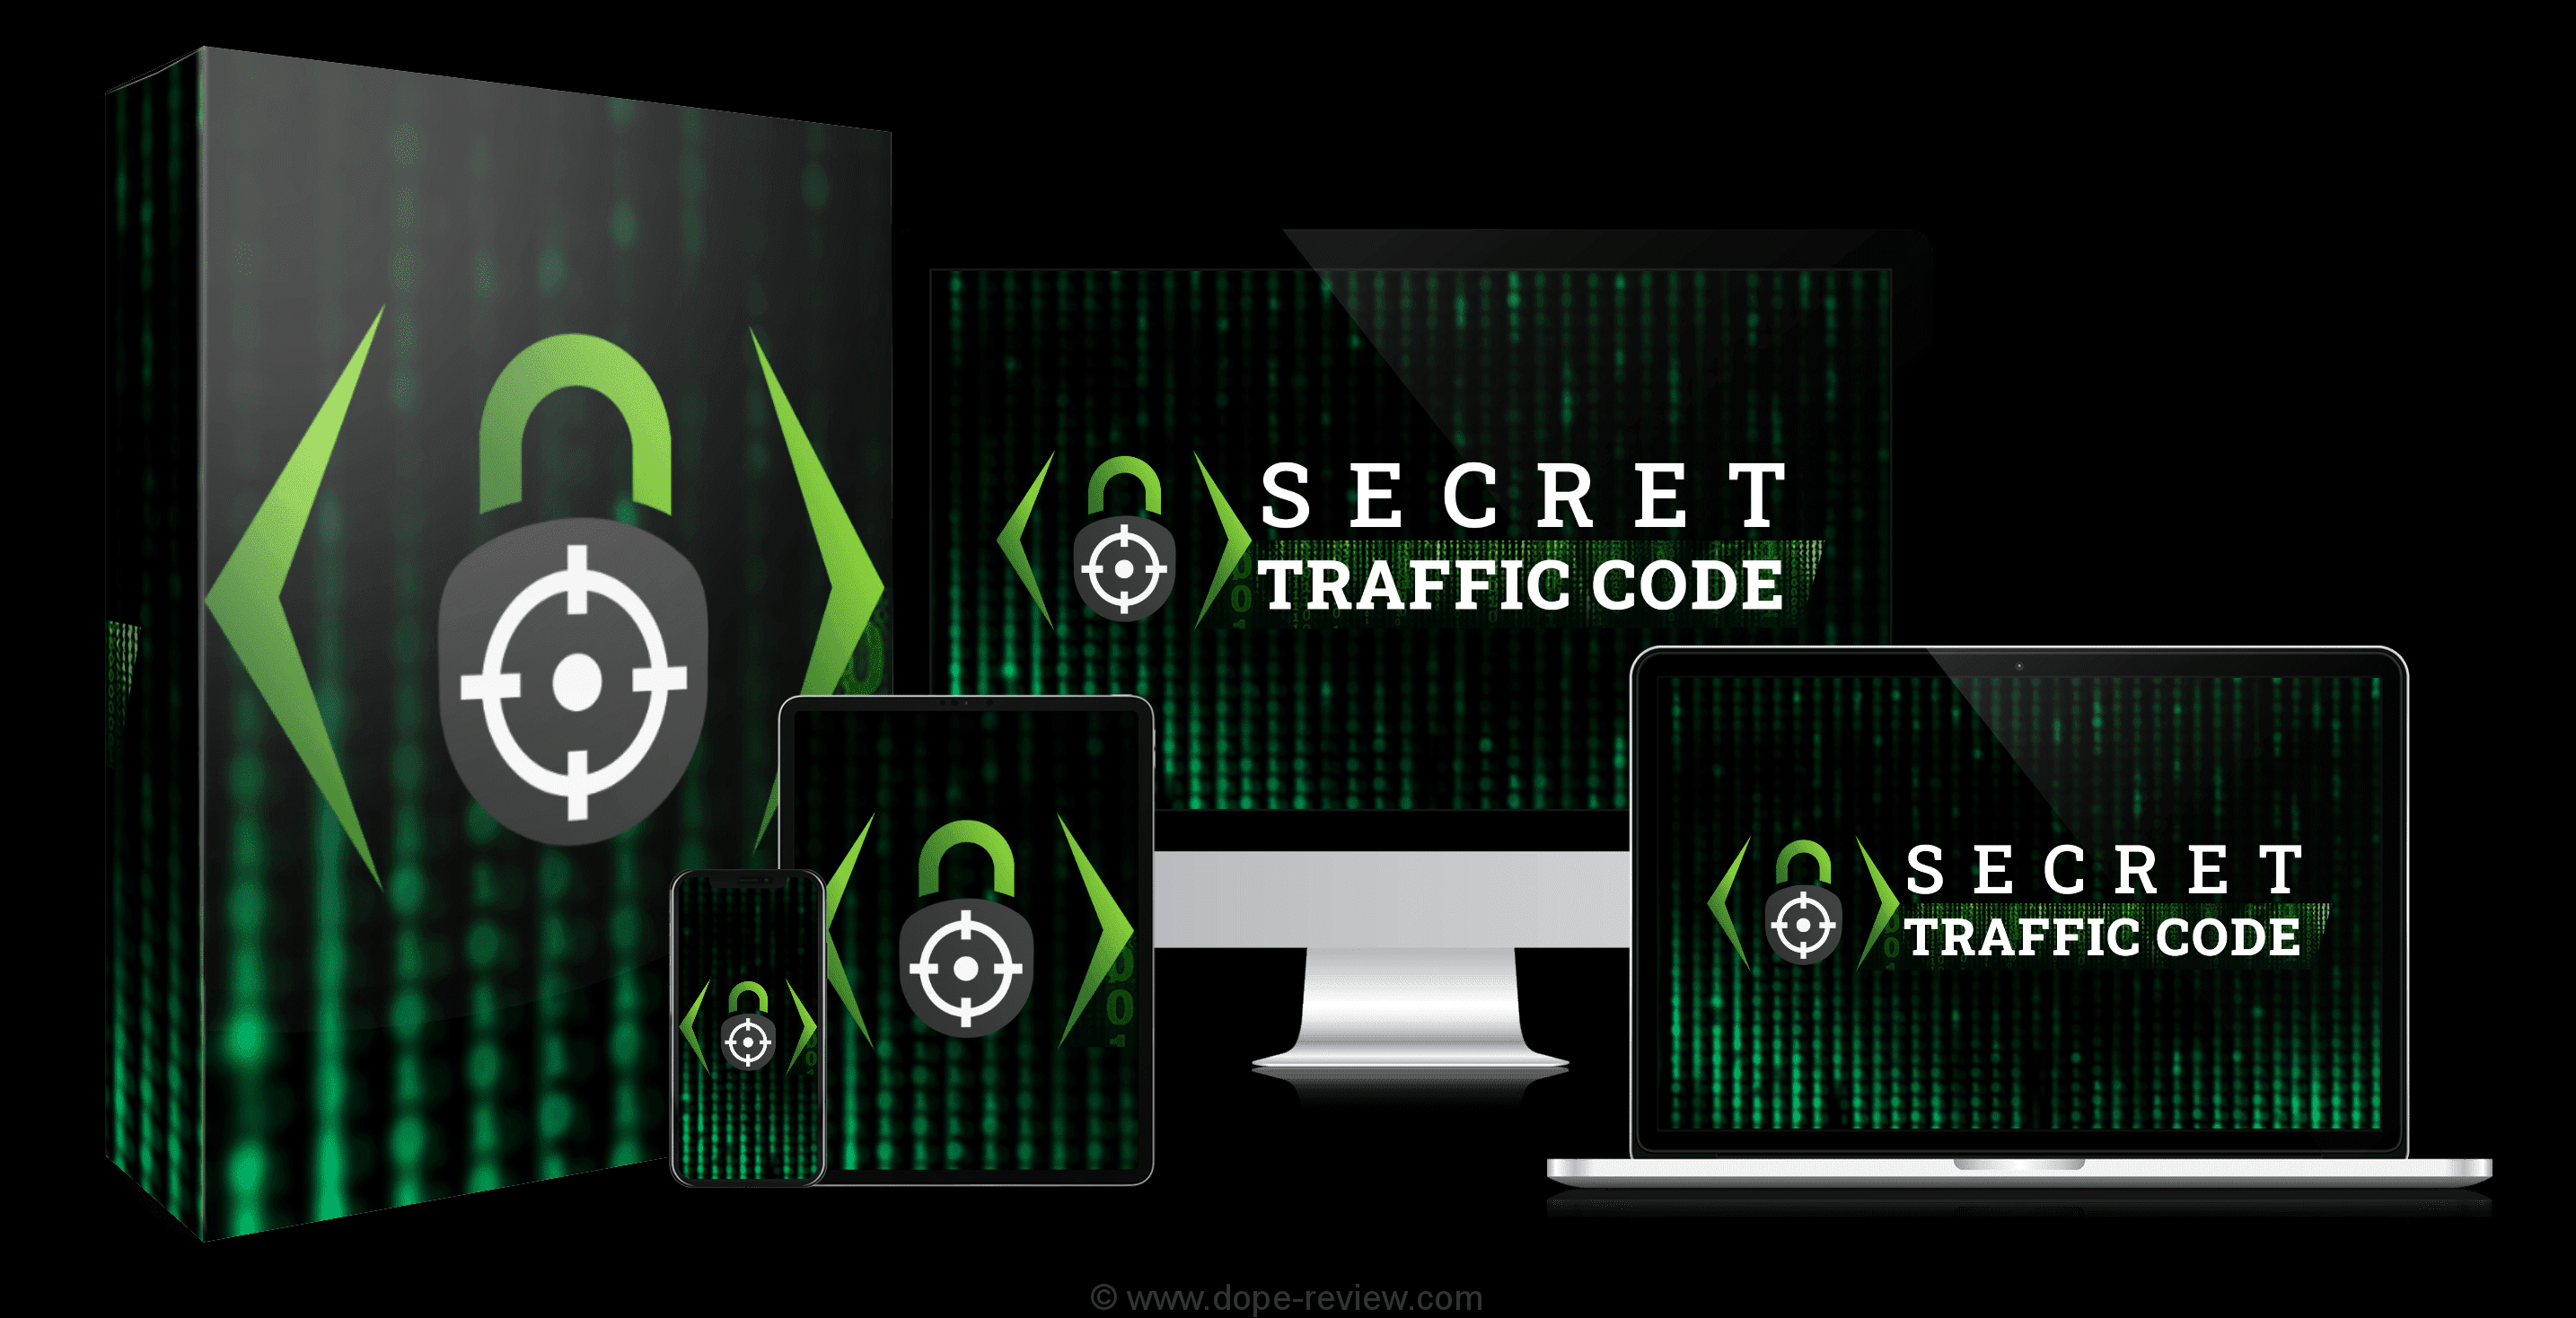 Secret Traffic Code Review